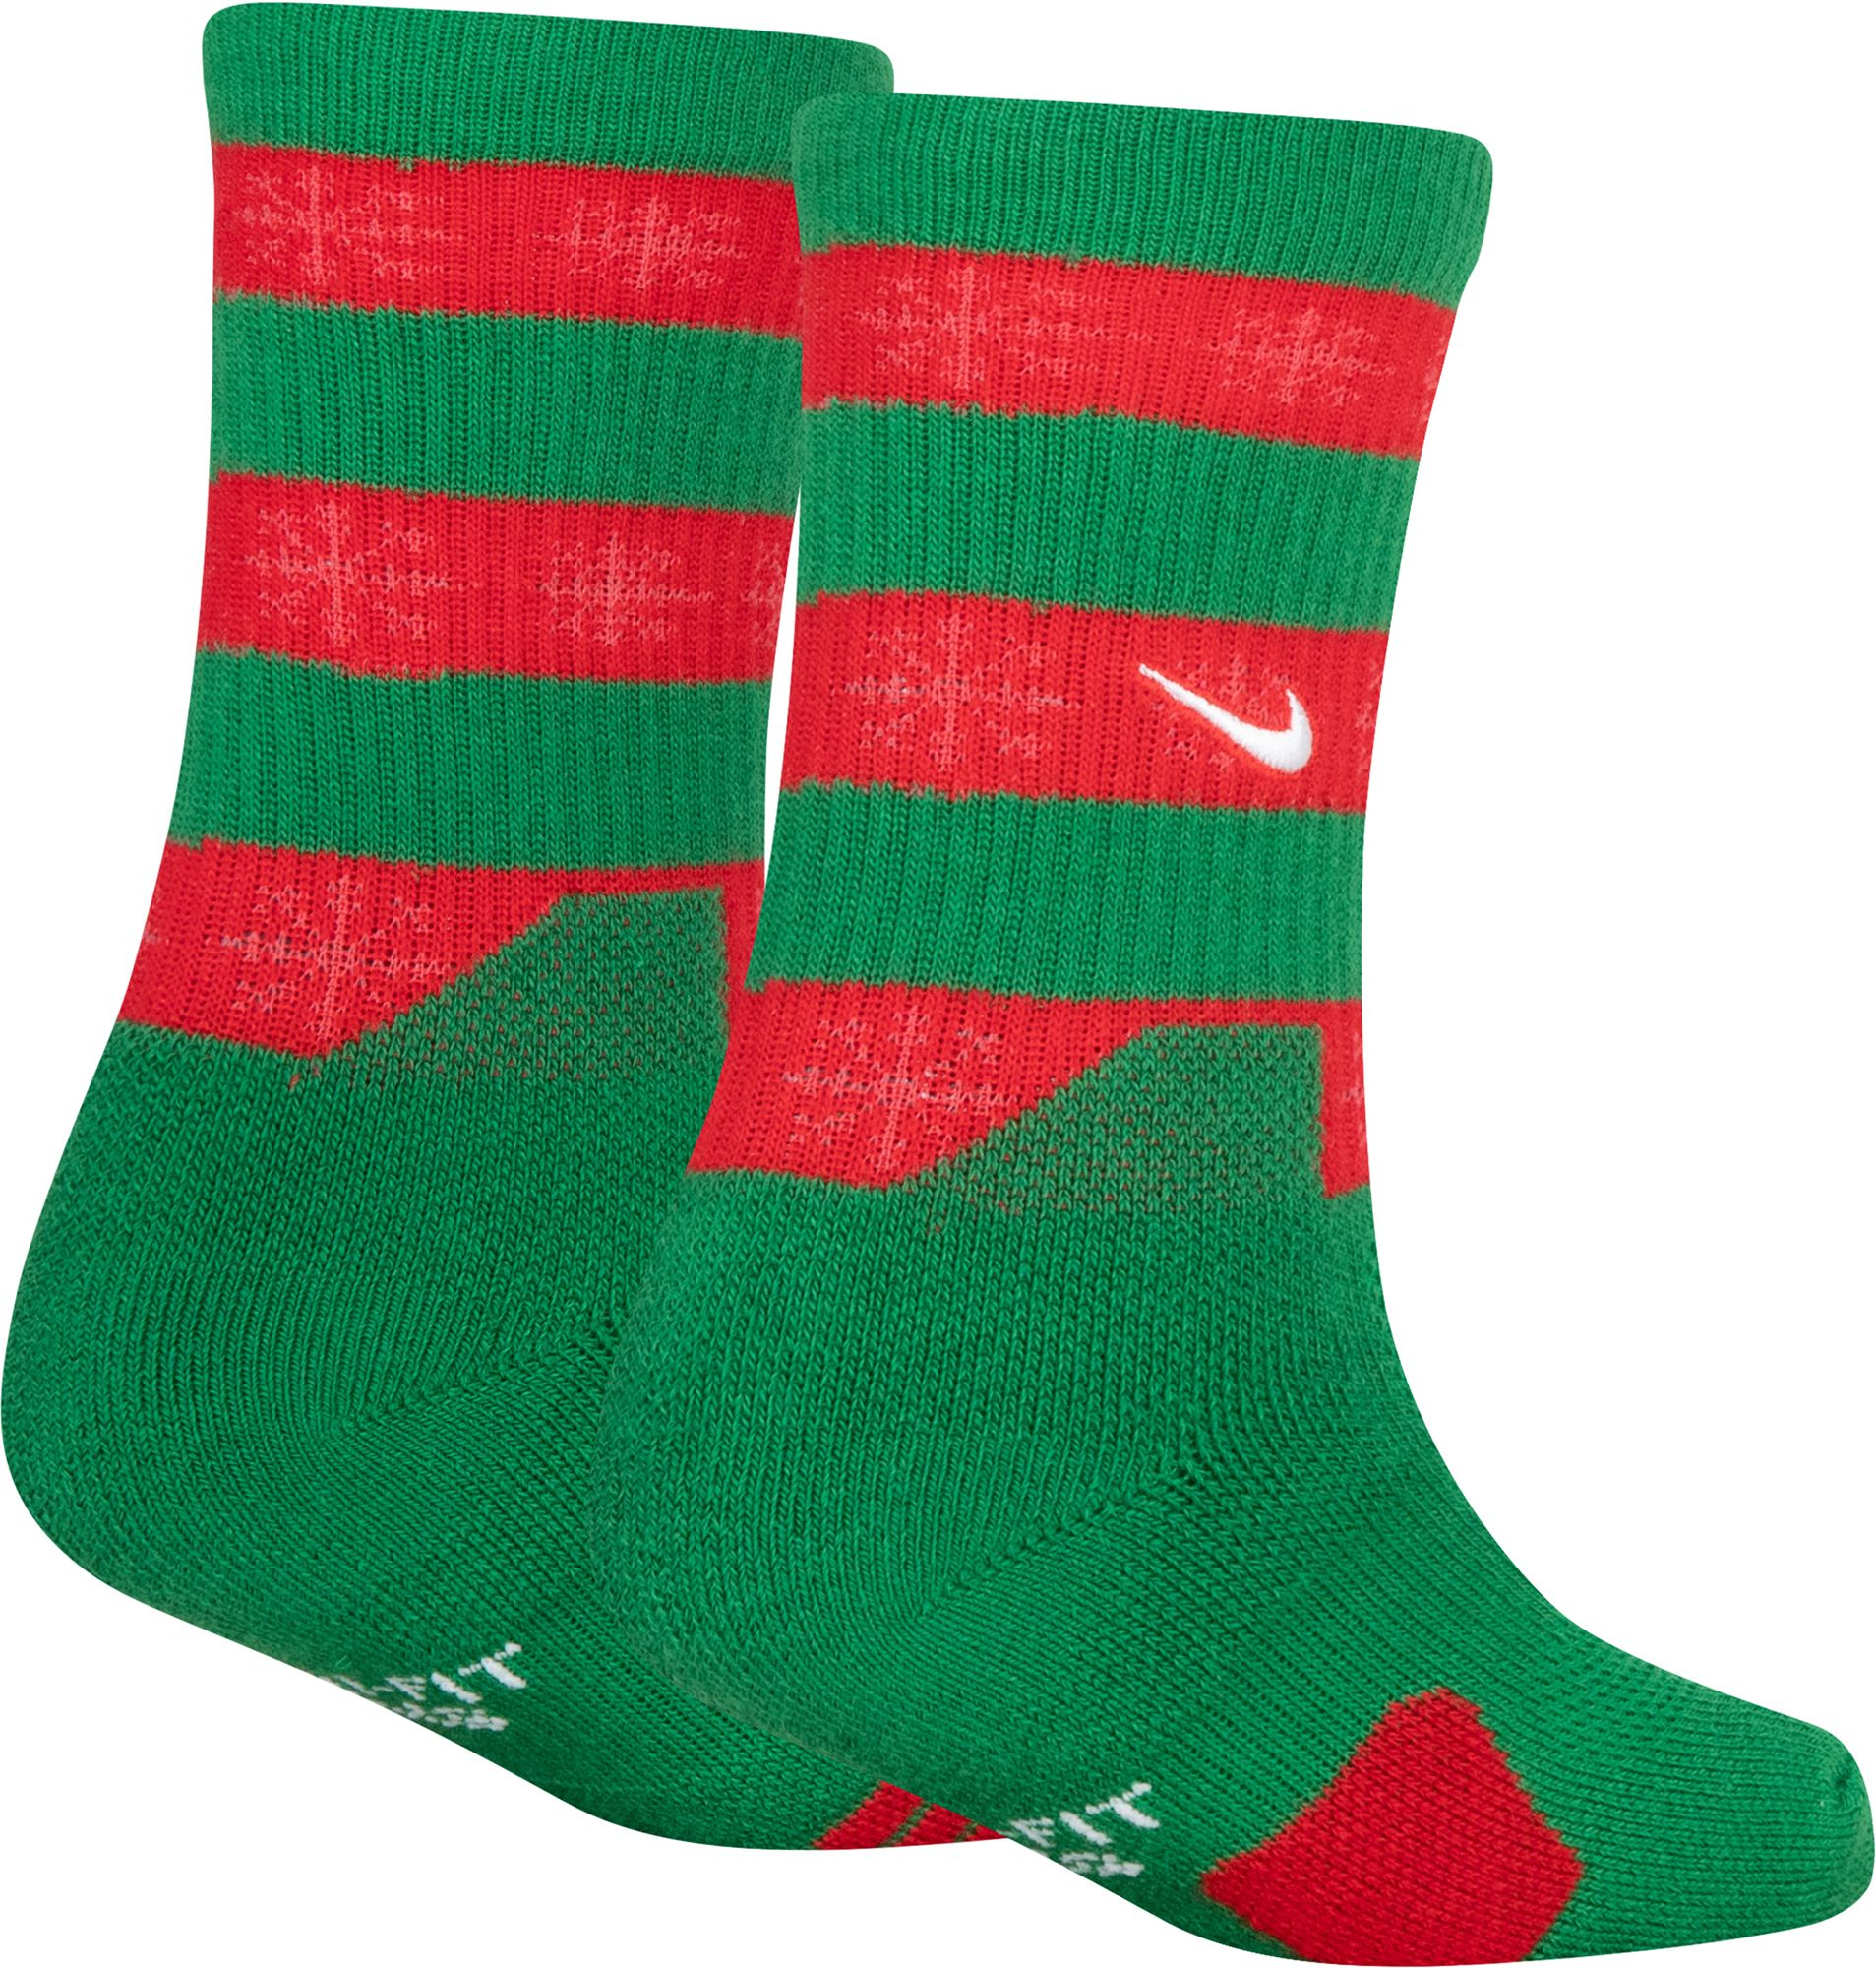 Nike Kids' Elite Christmas Crew Socks